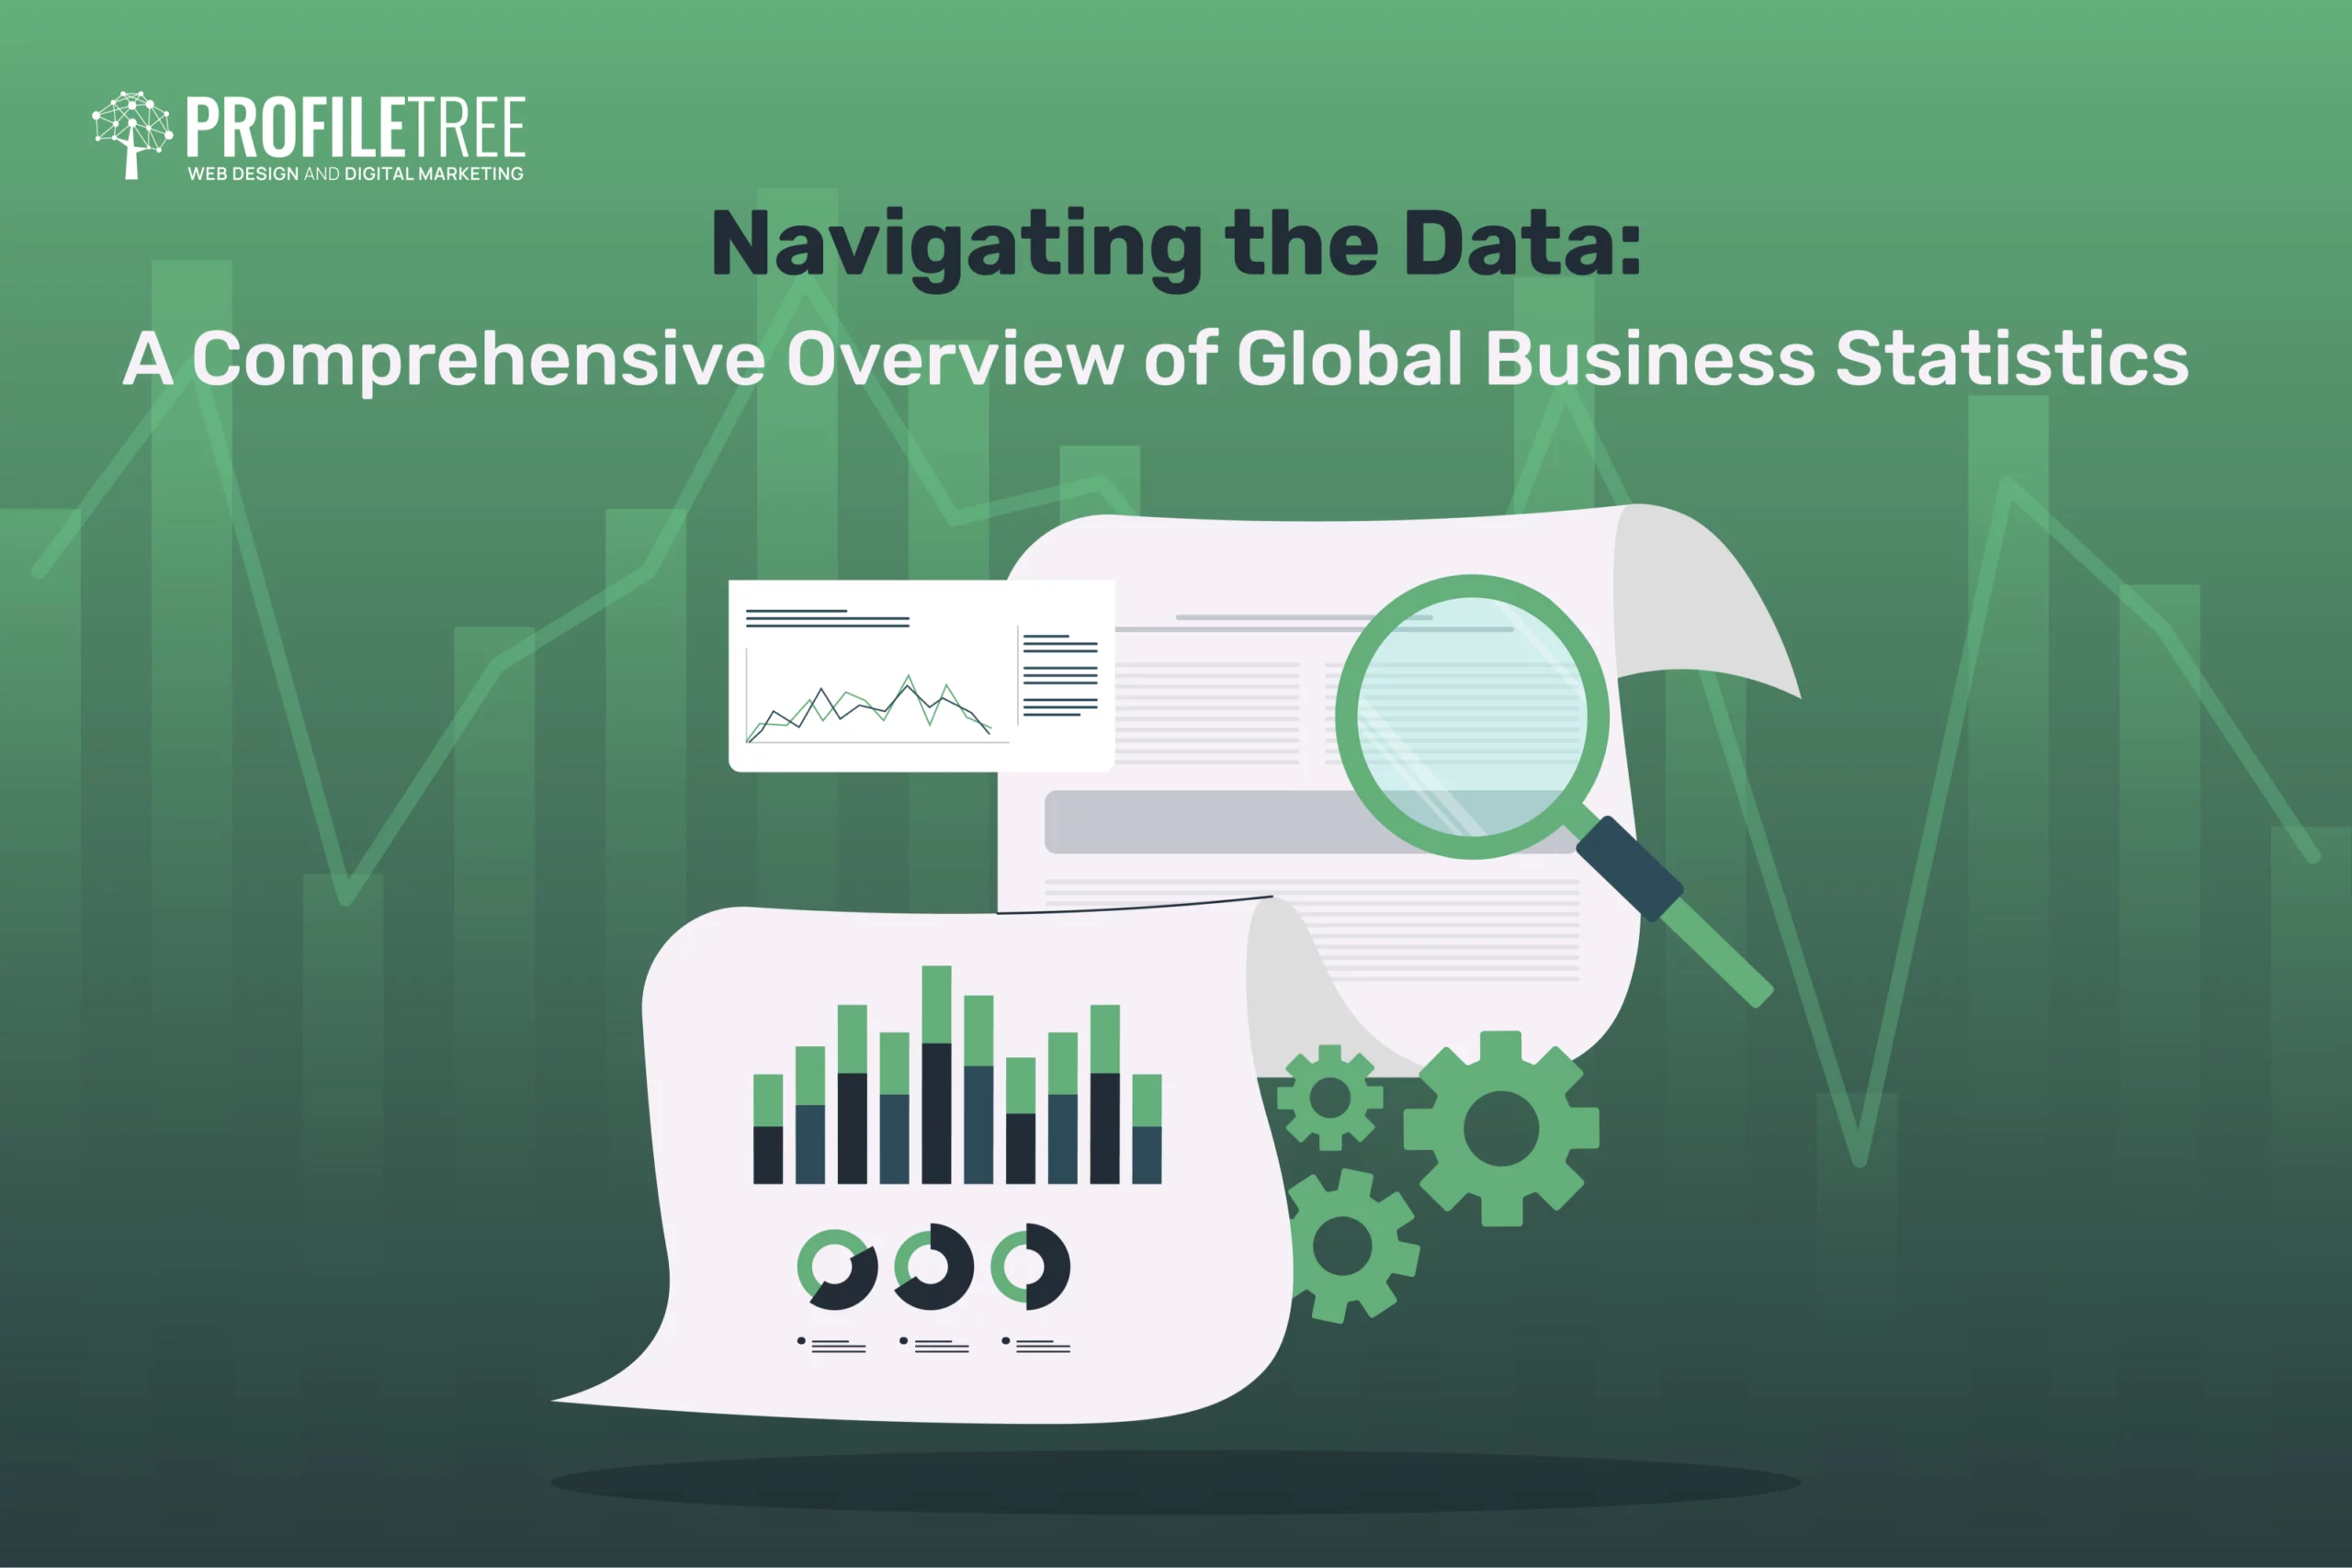 Global Business Statistics